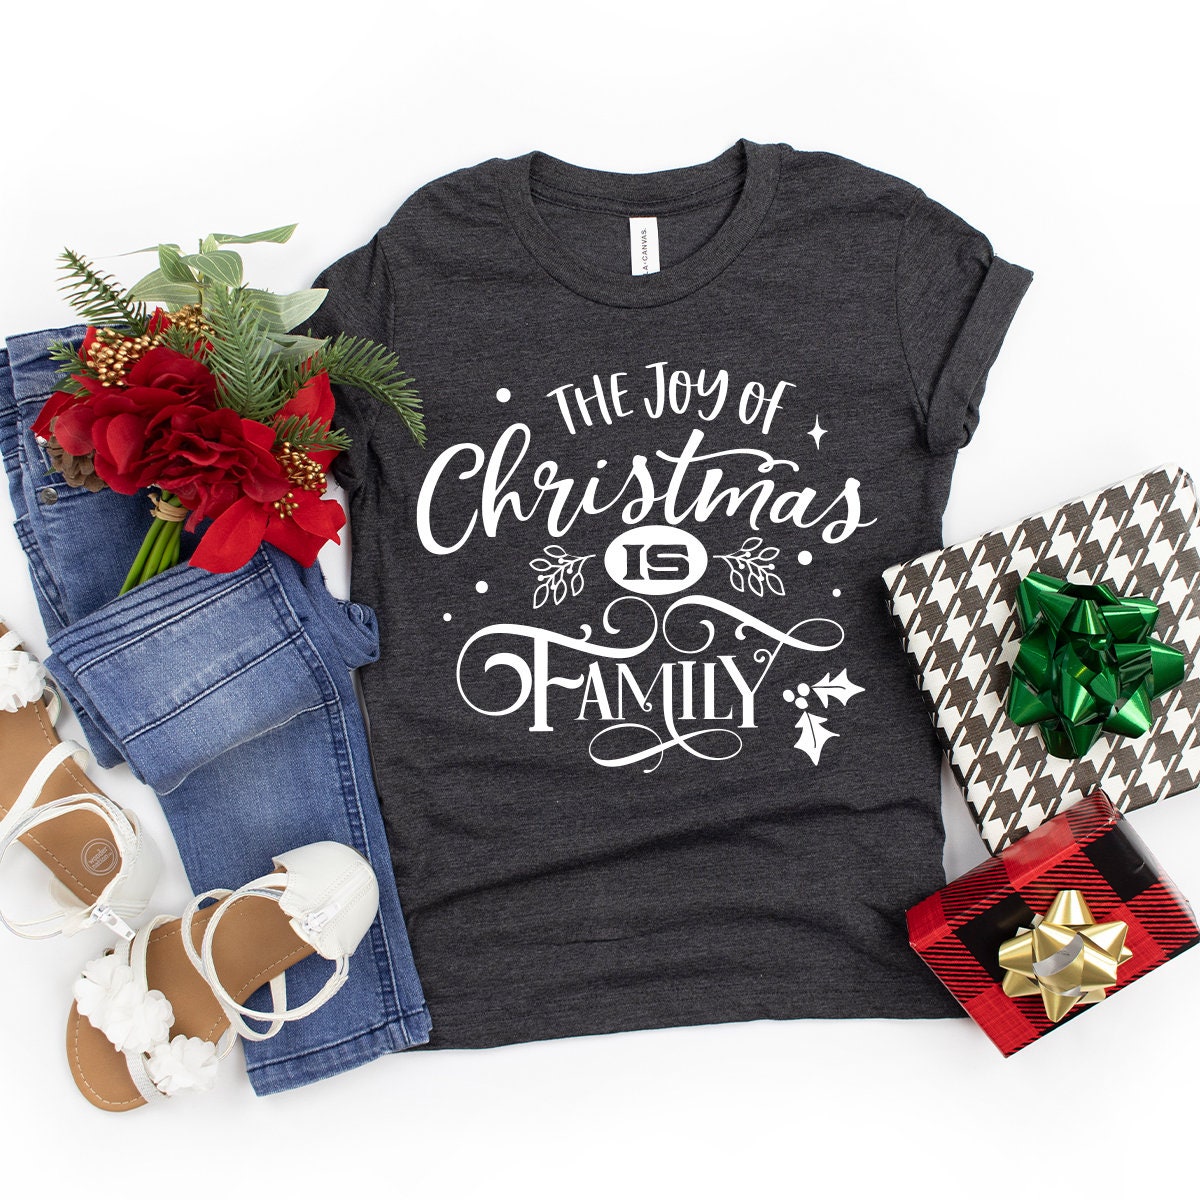 The Joy Of Christmas Is Family T-Shirt, Matching Family Christmas Shirt, Jolly Christmas Shirt, Funny Chrtismas Shirt, Family Christmas Gİft - Fastdeliverytees.com